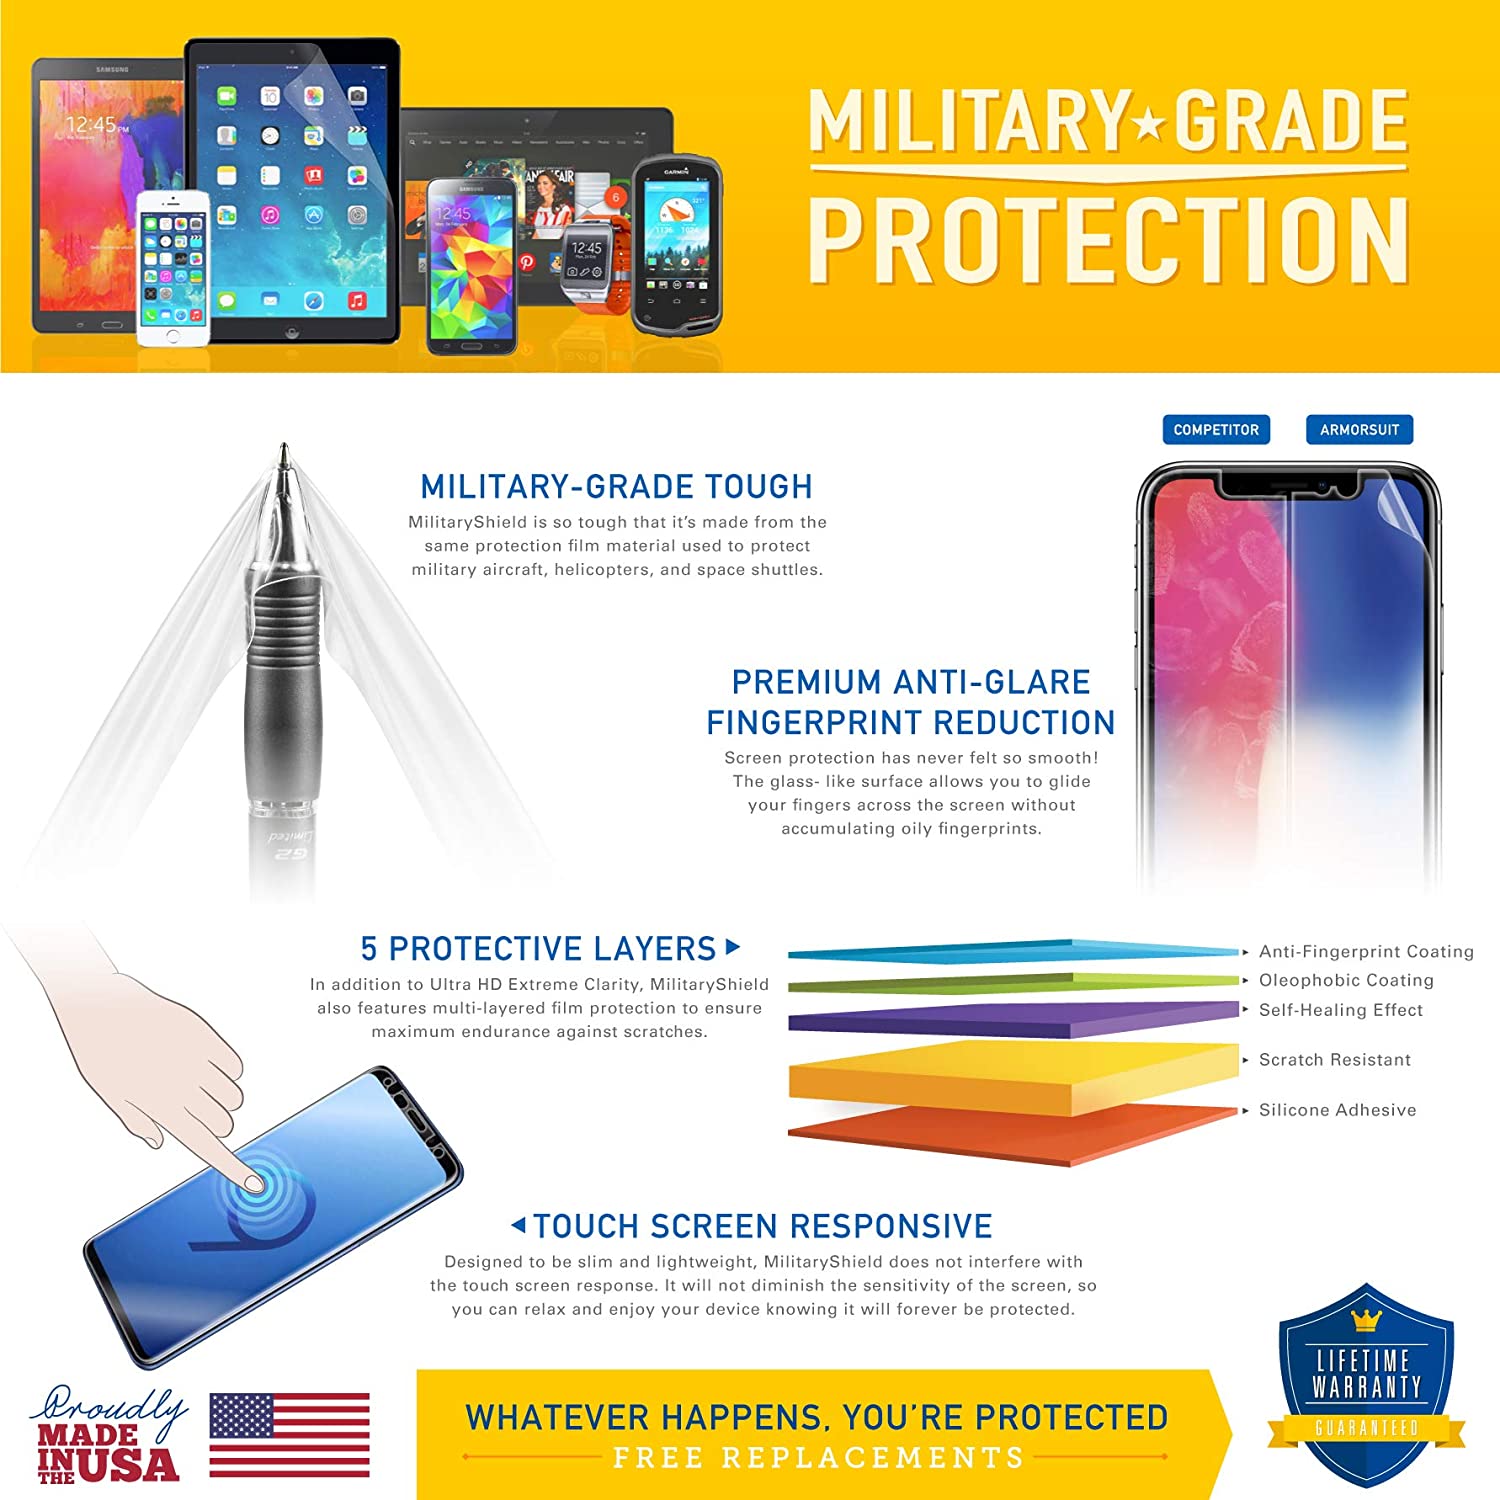 Samsung Galaxy S3 Full Body Skin Protector